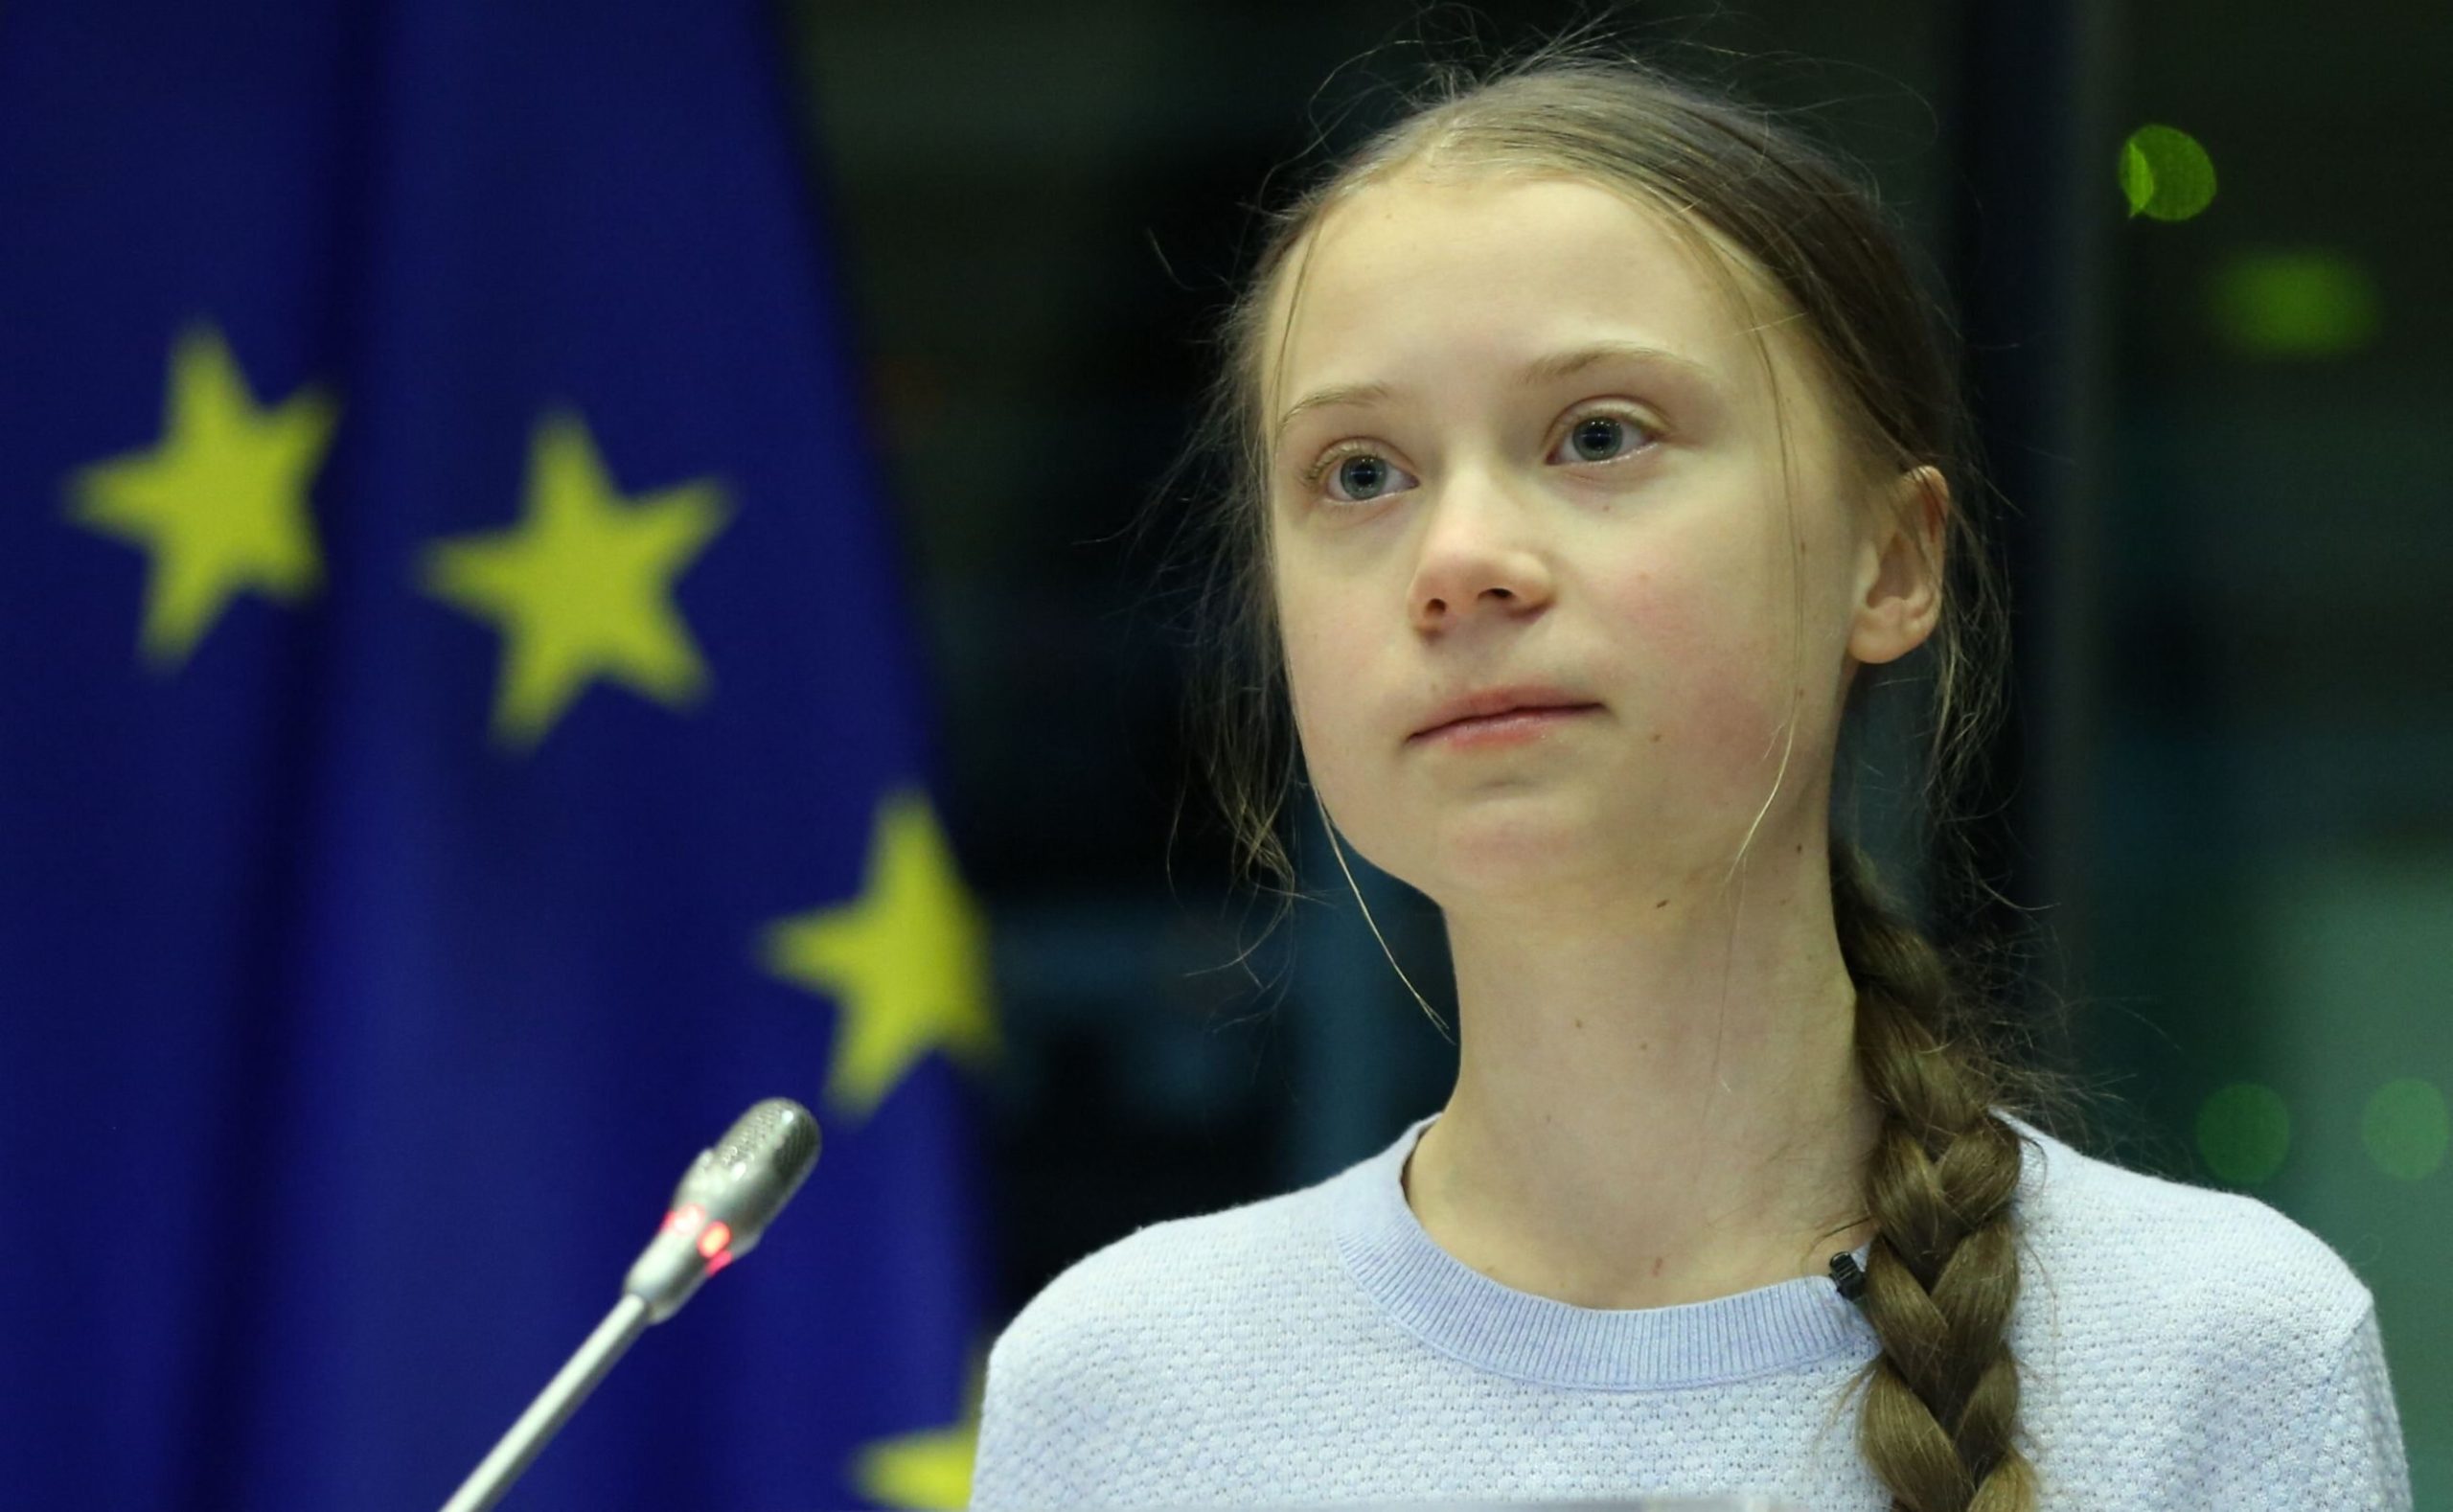 Greta Thunberg returned to school.  “My year break is over.”